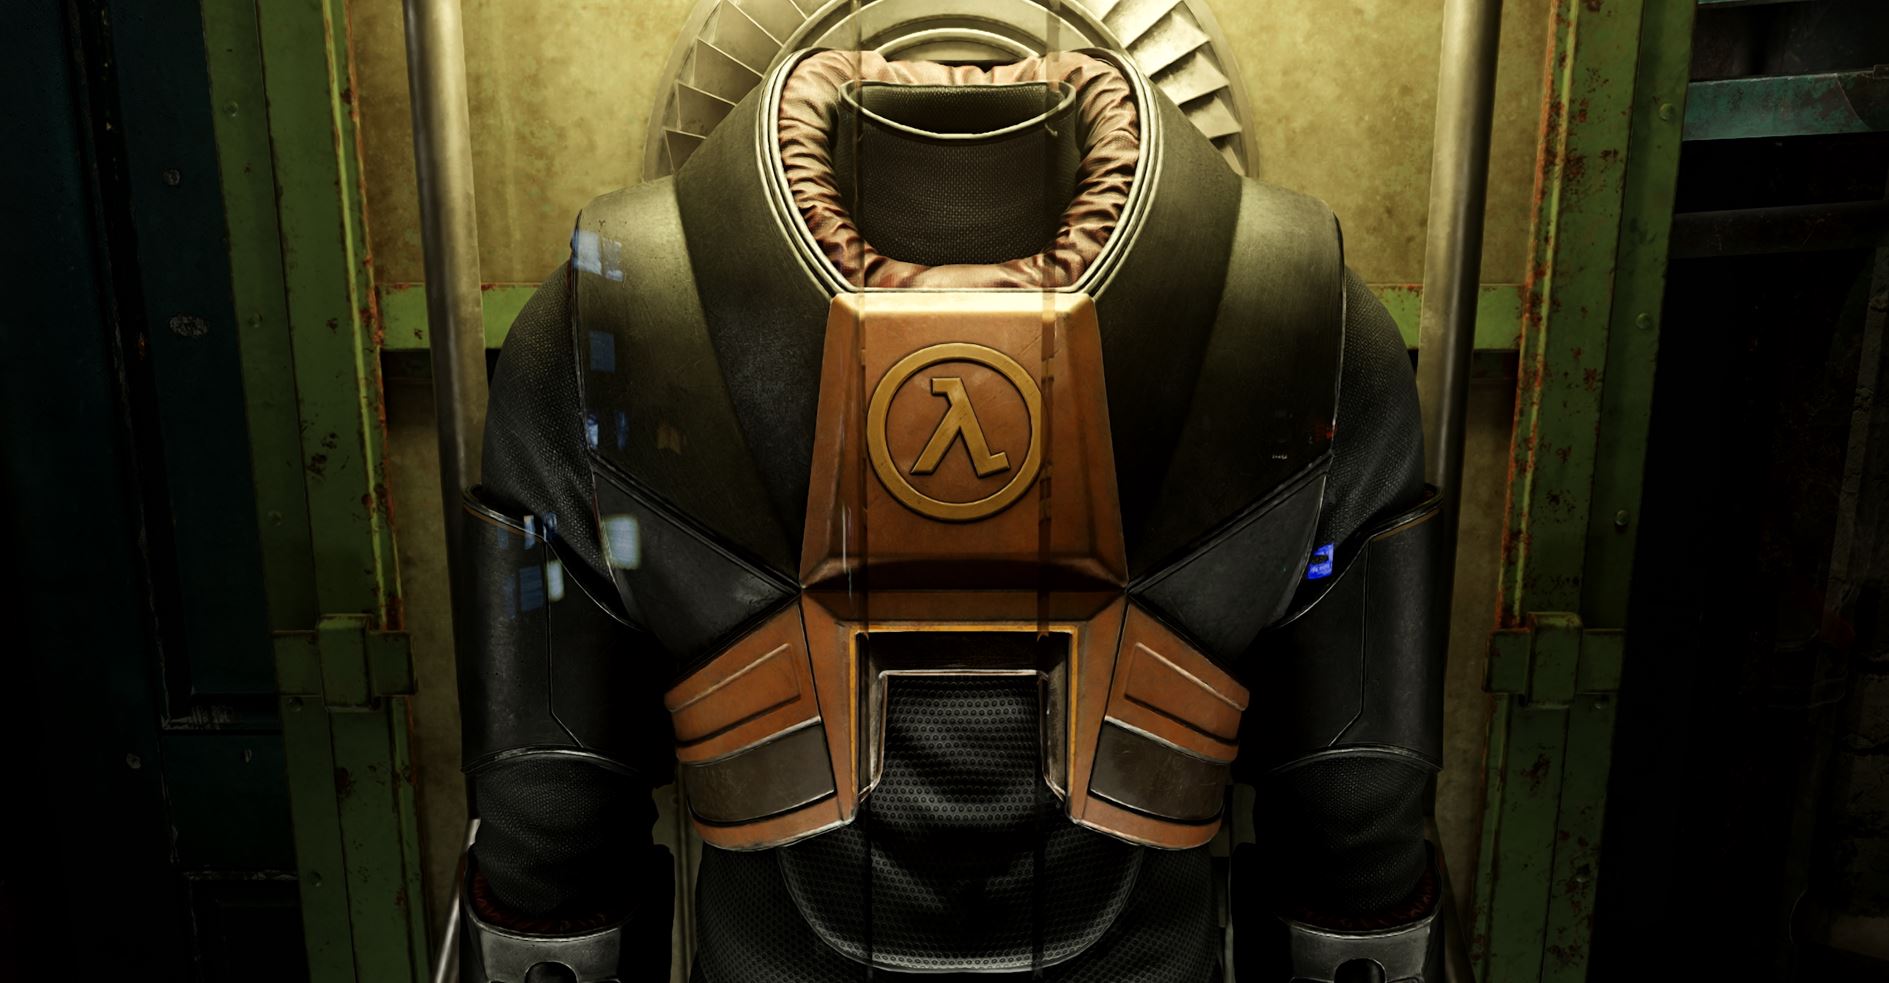 Gordon Freeman's suit in Half-Life 2 RTX